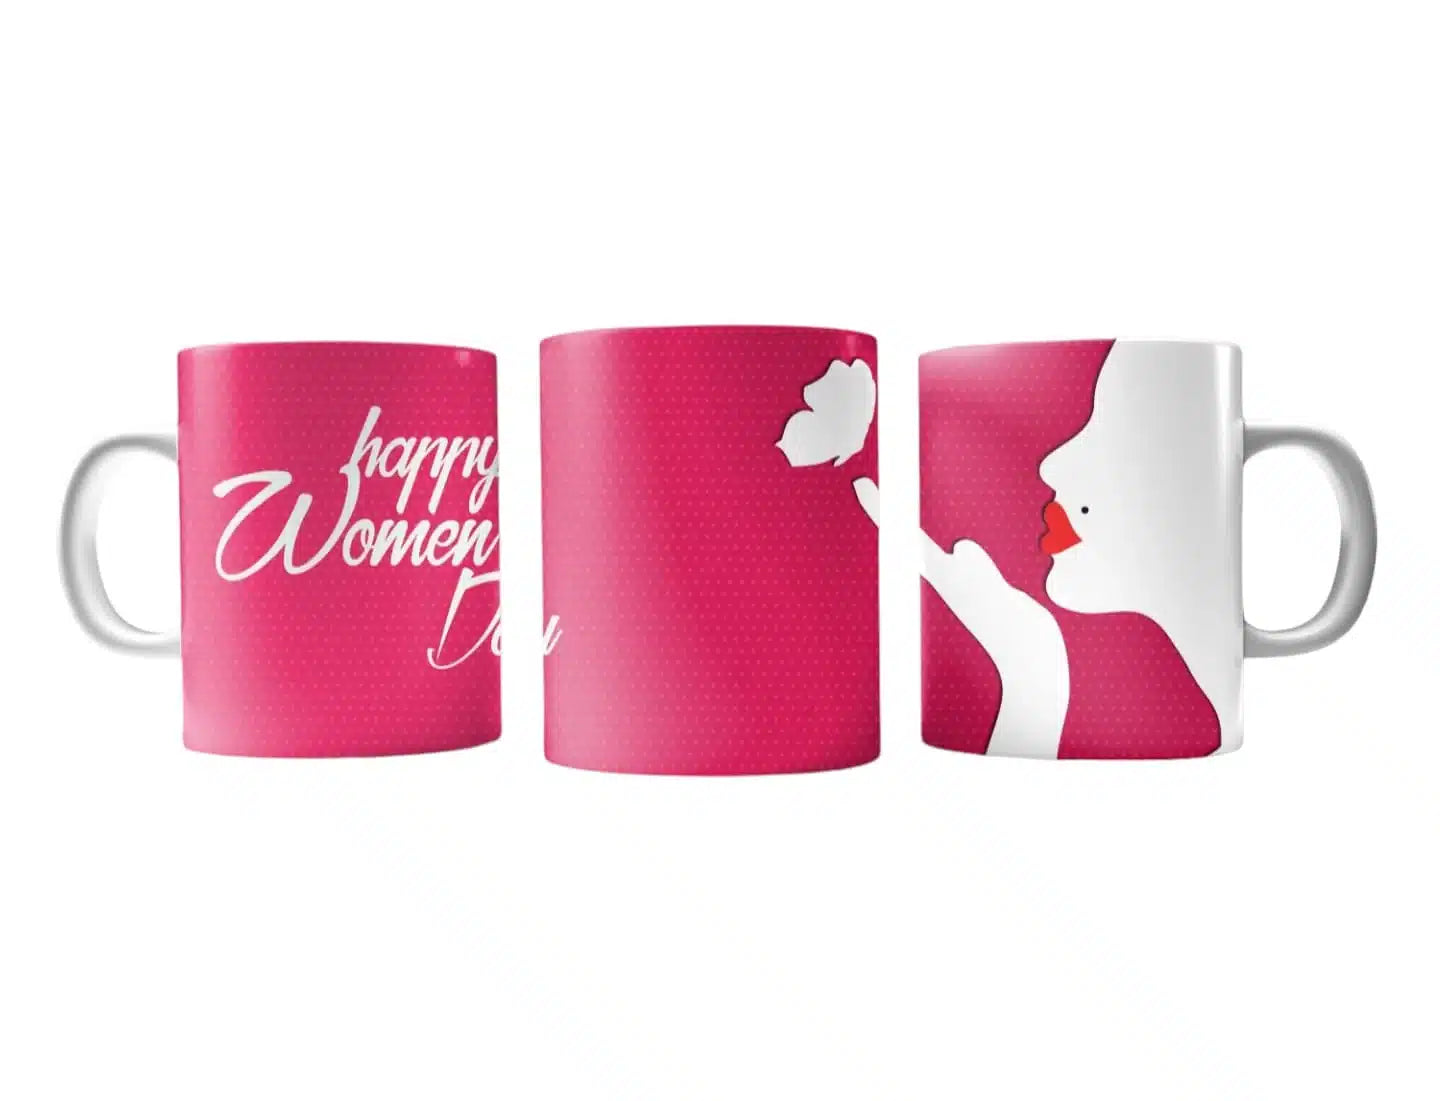 Cana personalizata, Happy women day, Ceramica, Alb, 350 ml